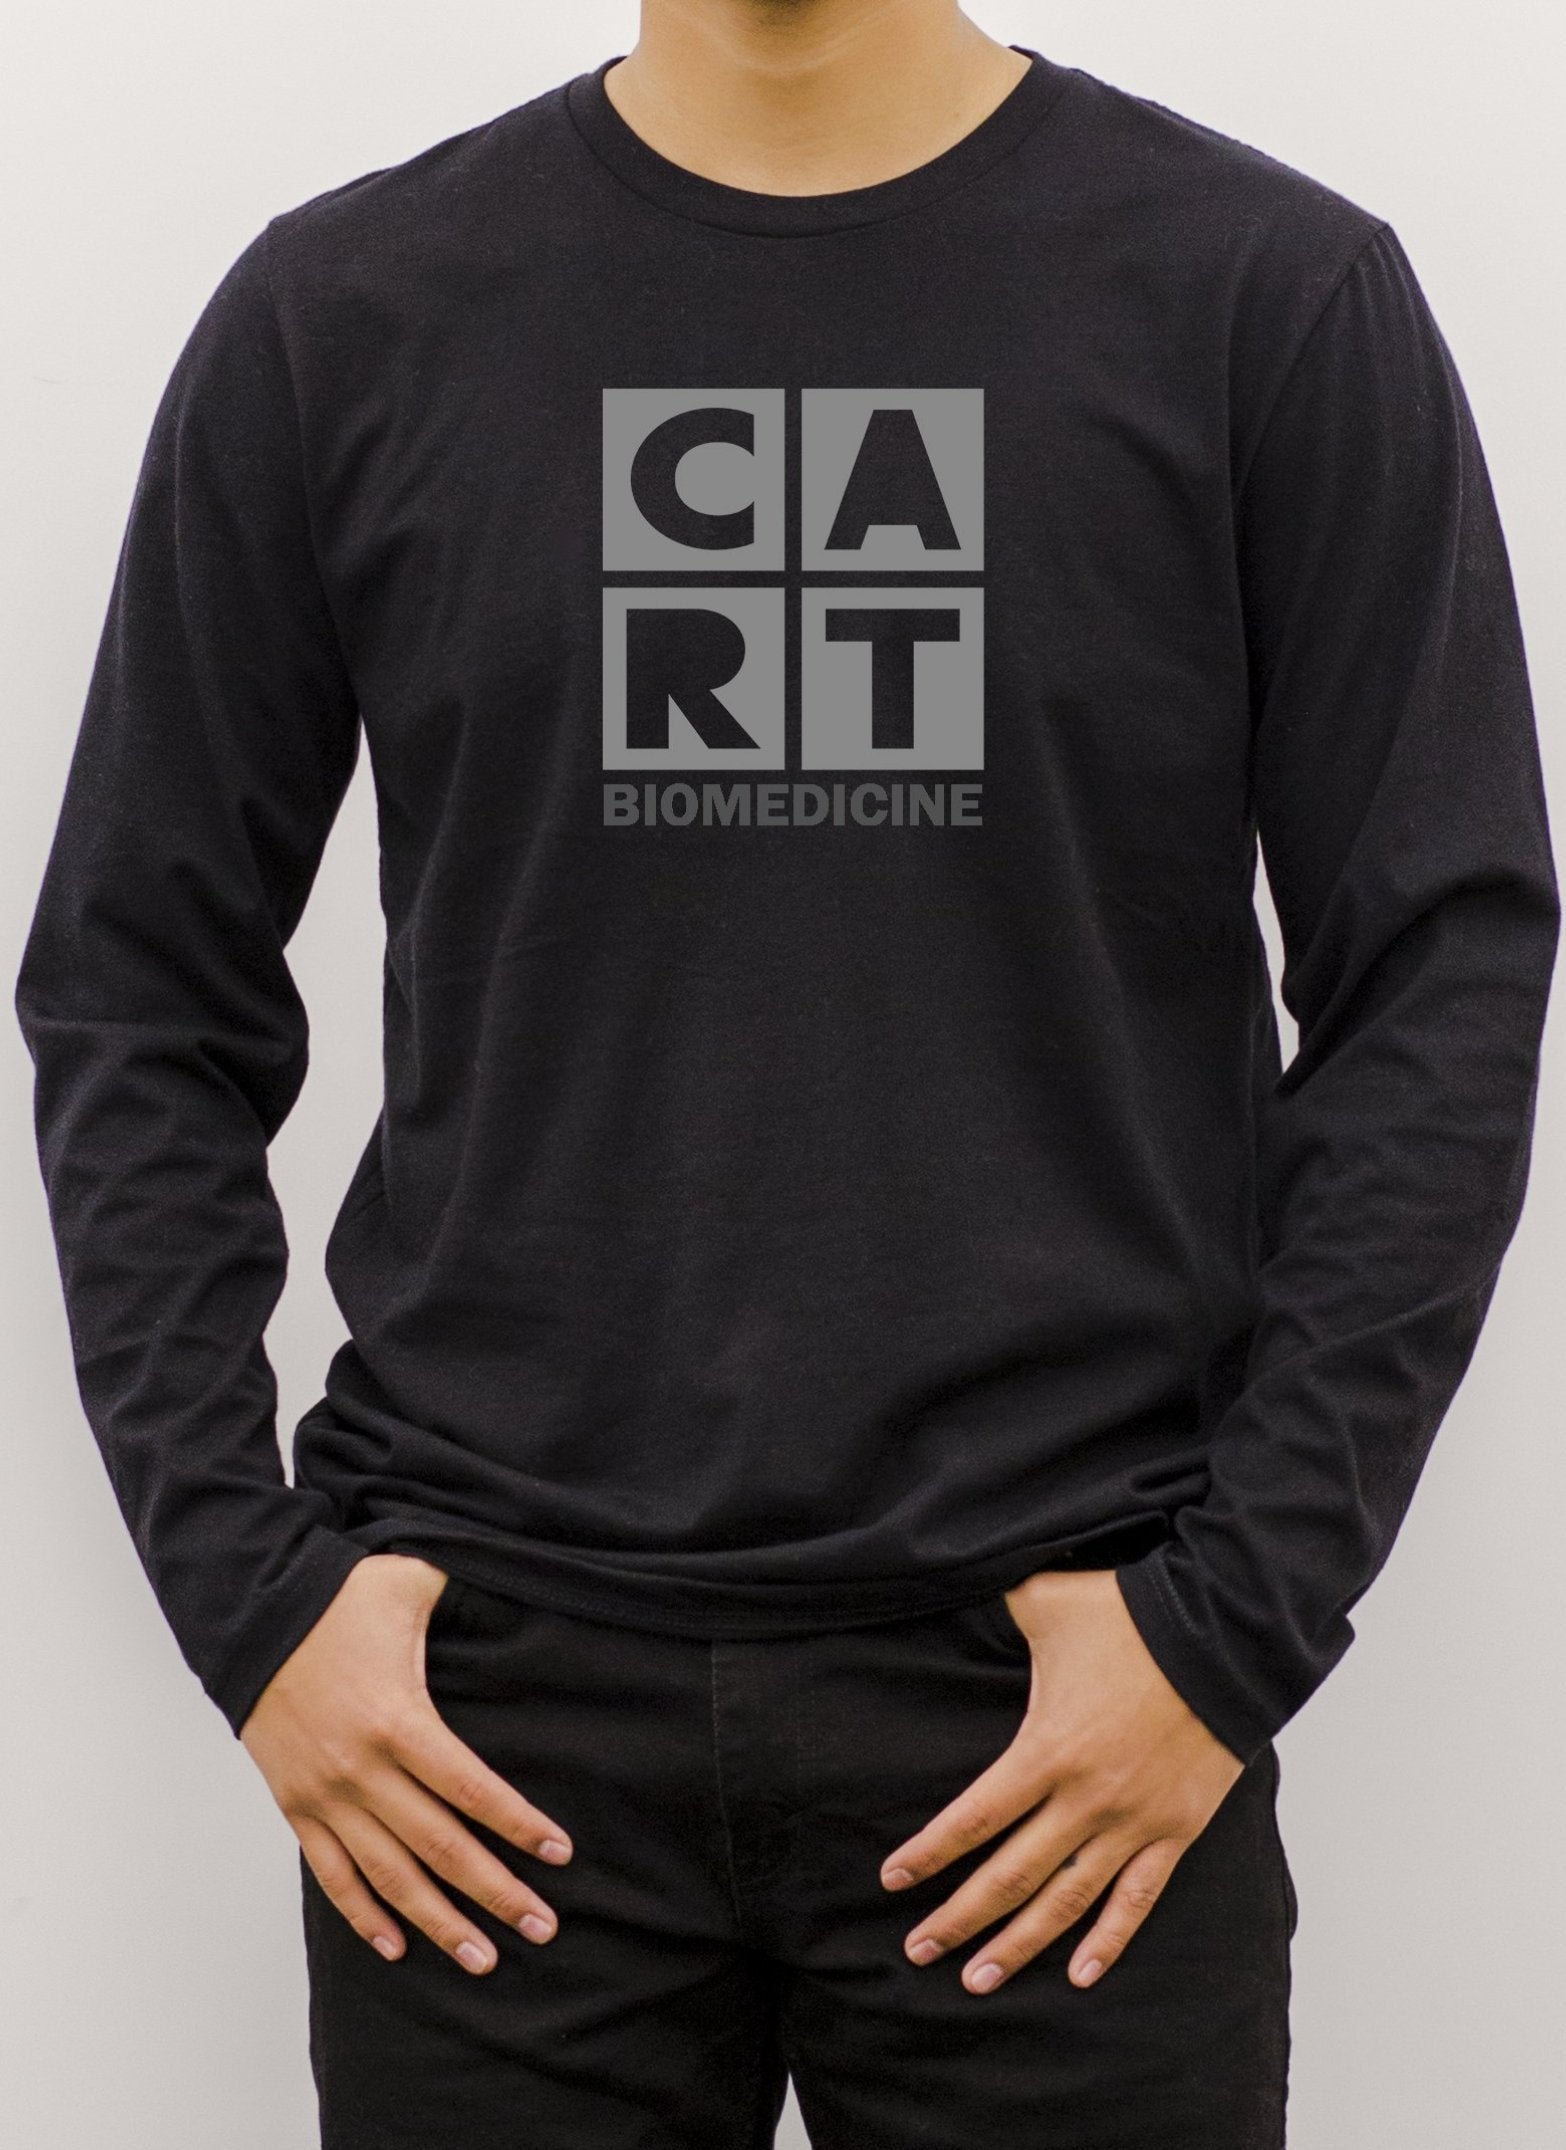 Long Sleeve T-Shirt (Unisex fit) - Biomedicine black/grey logo